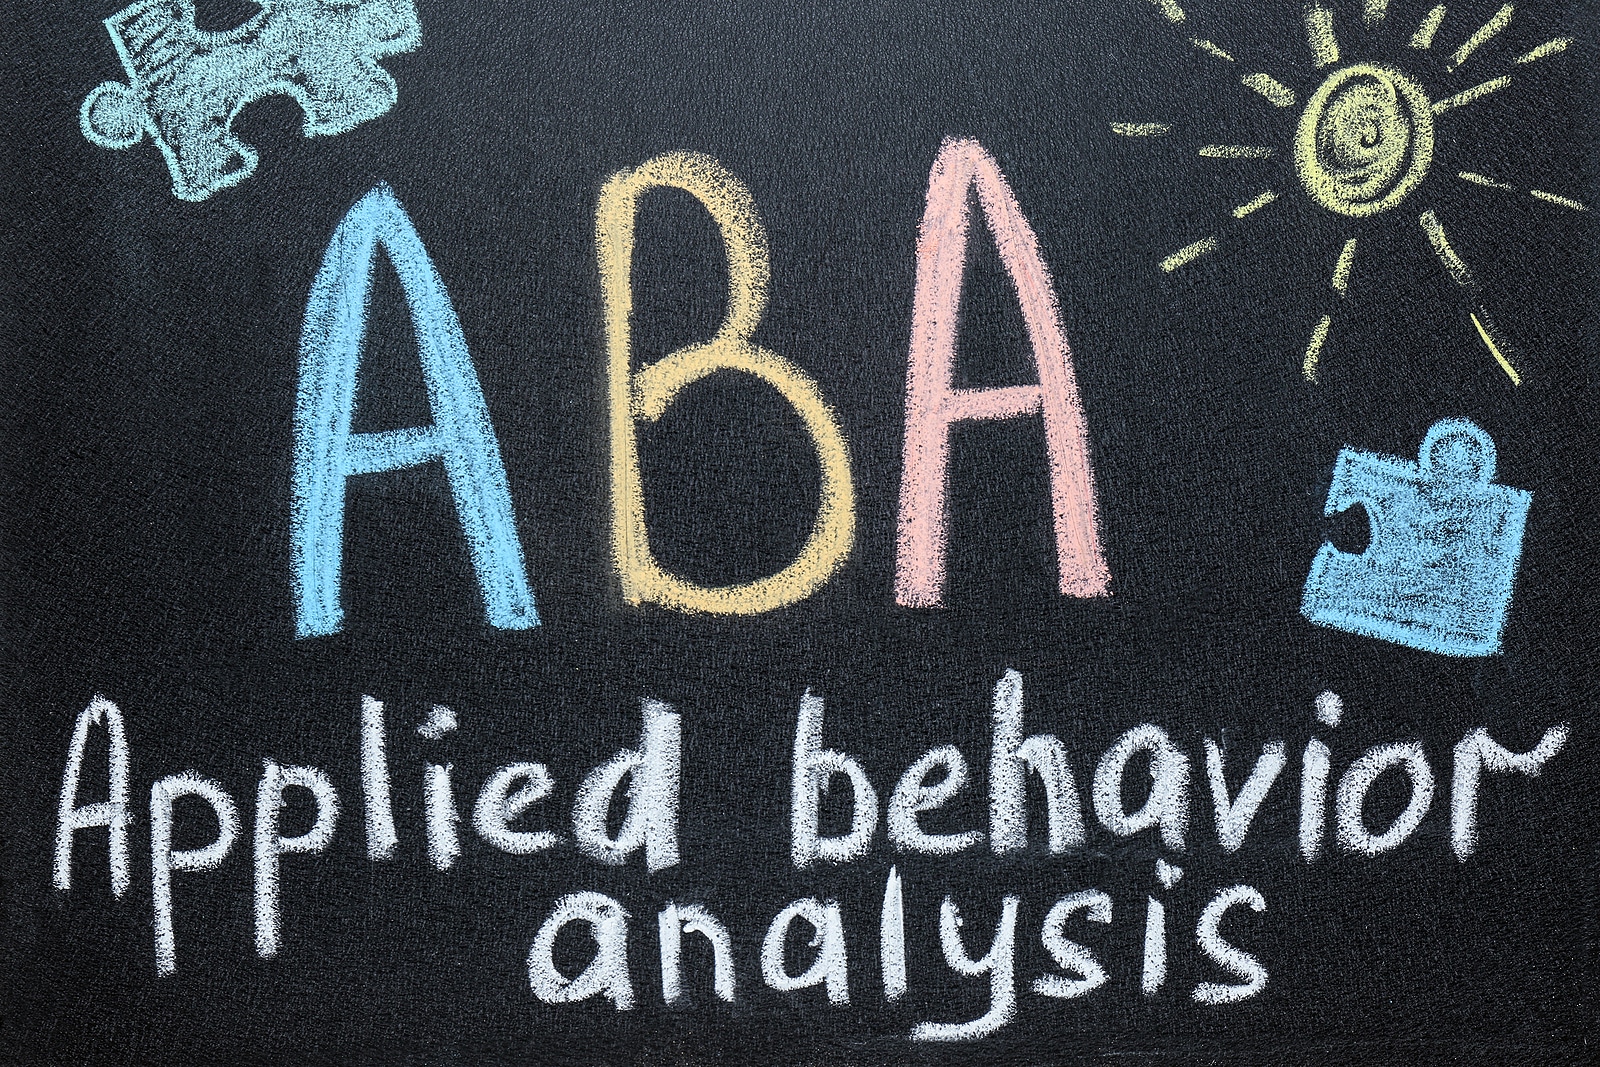 The Principles of Applied Behavior Analysis (ABA)